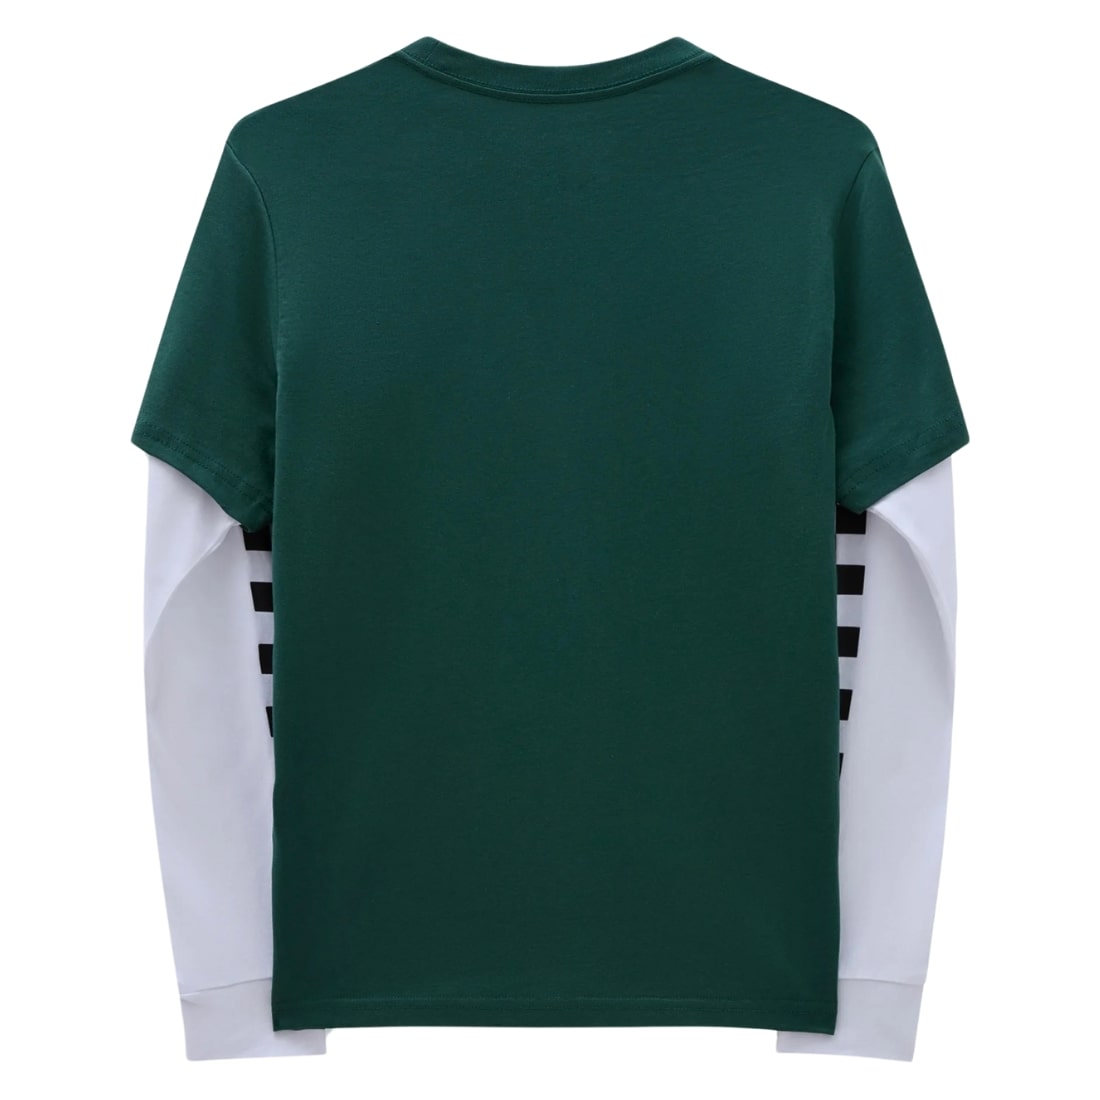 Vans Boys Long Check Twofer Long Sleeve T-Shirt - Bistro Green - Boys Skate Brand T-Shirt by Vans